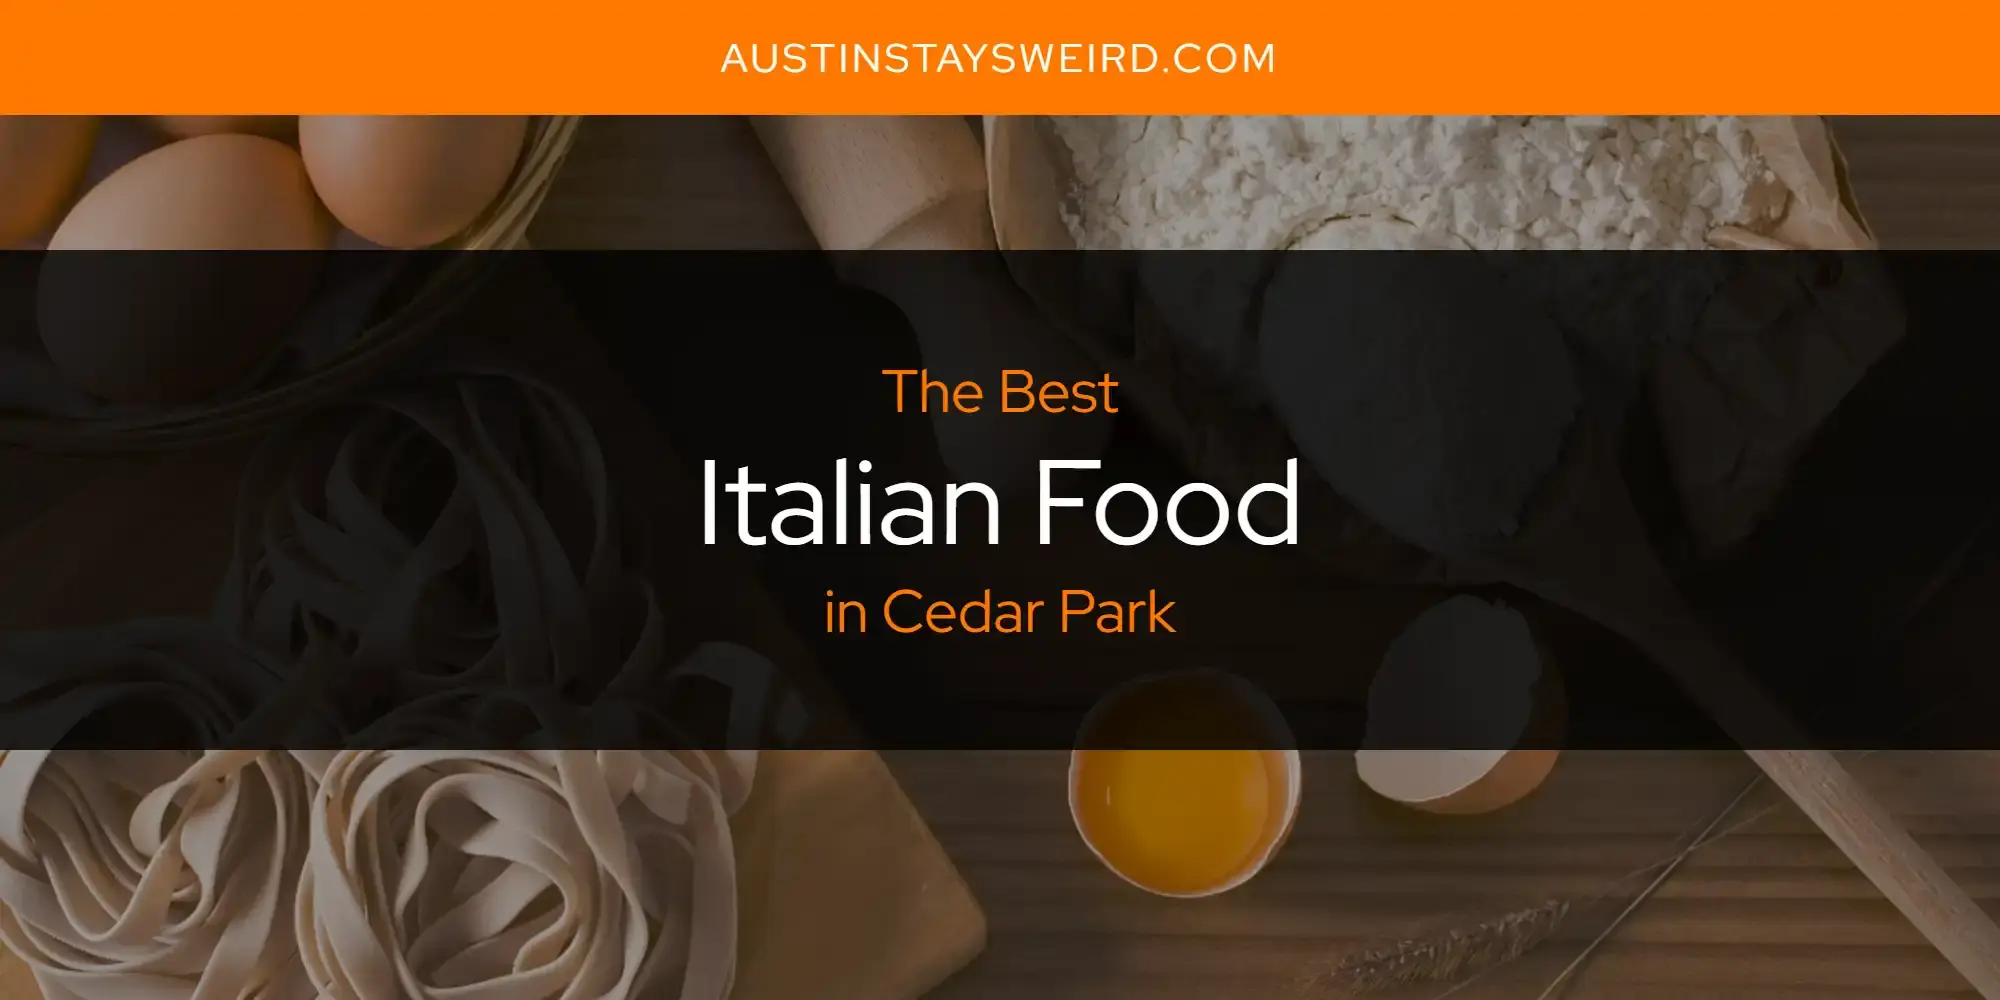 Best Italian Food in Cedar Park? Here's the Top 8